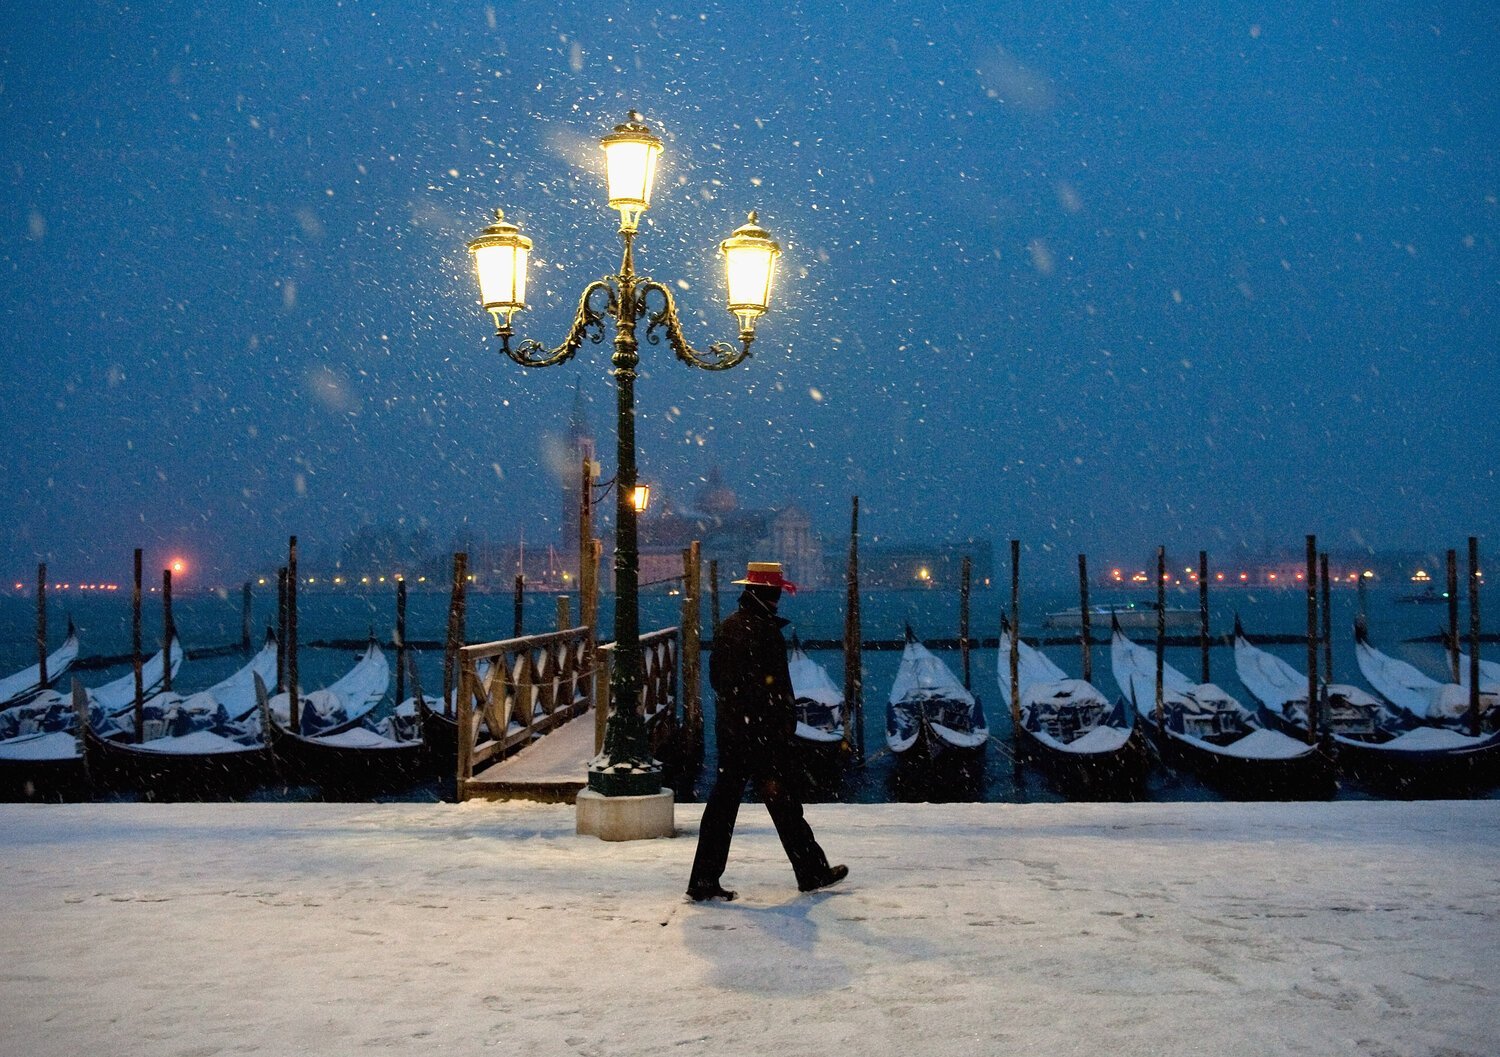 Venice: A Winter Wonderland